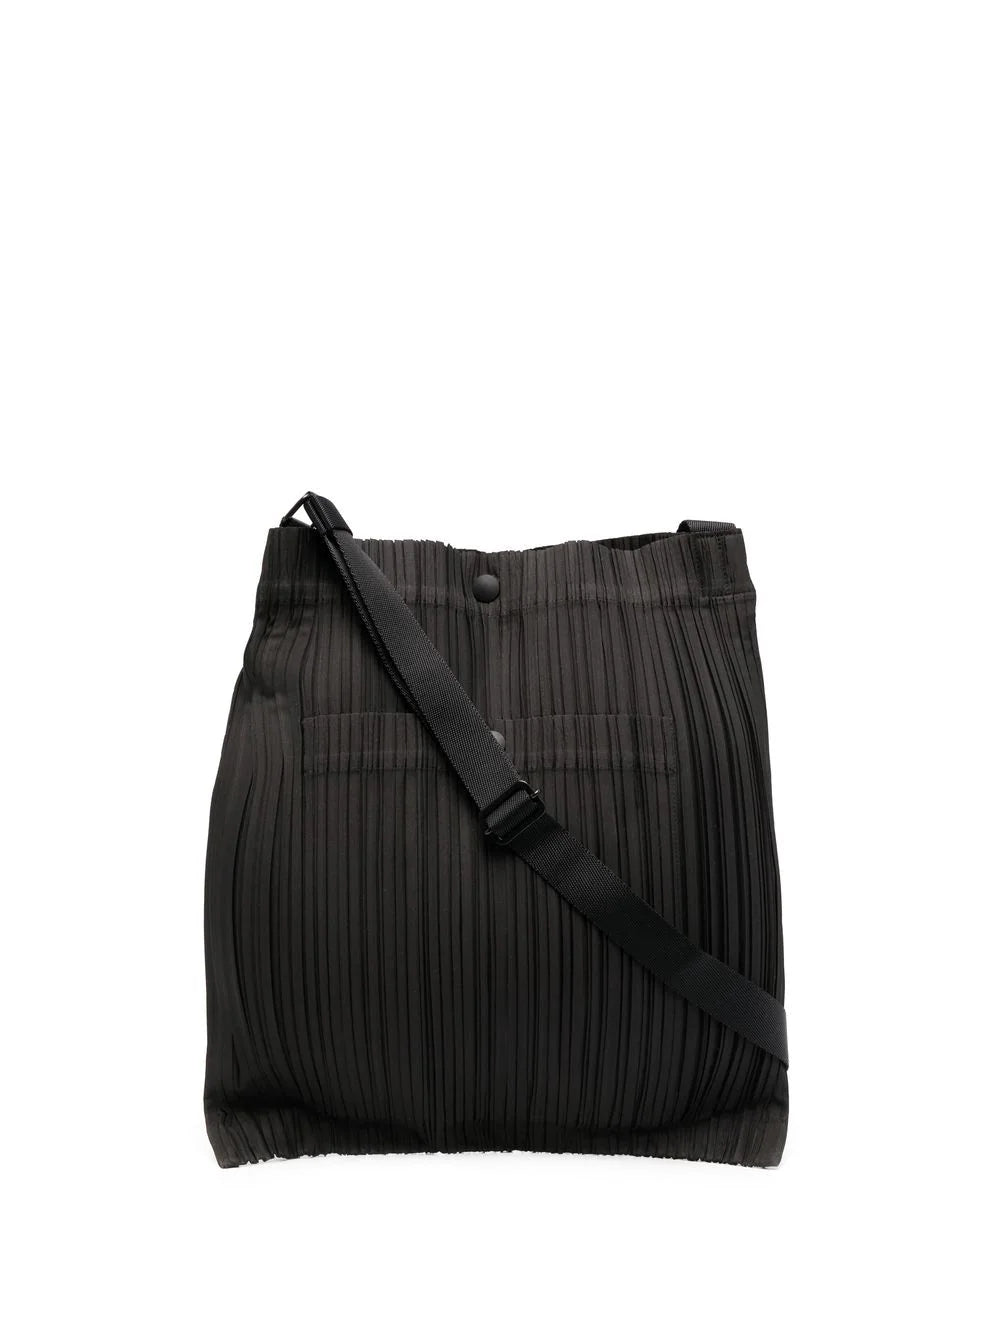 Issey Miyake Pleats Please - Pleats Bag in Black – Henrik Vibskov Boutique